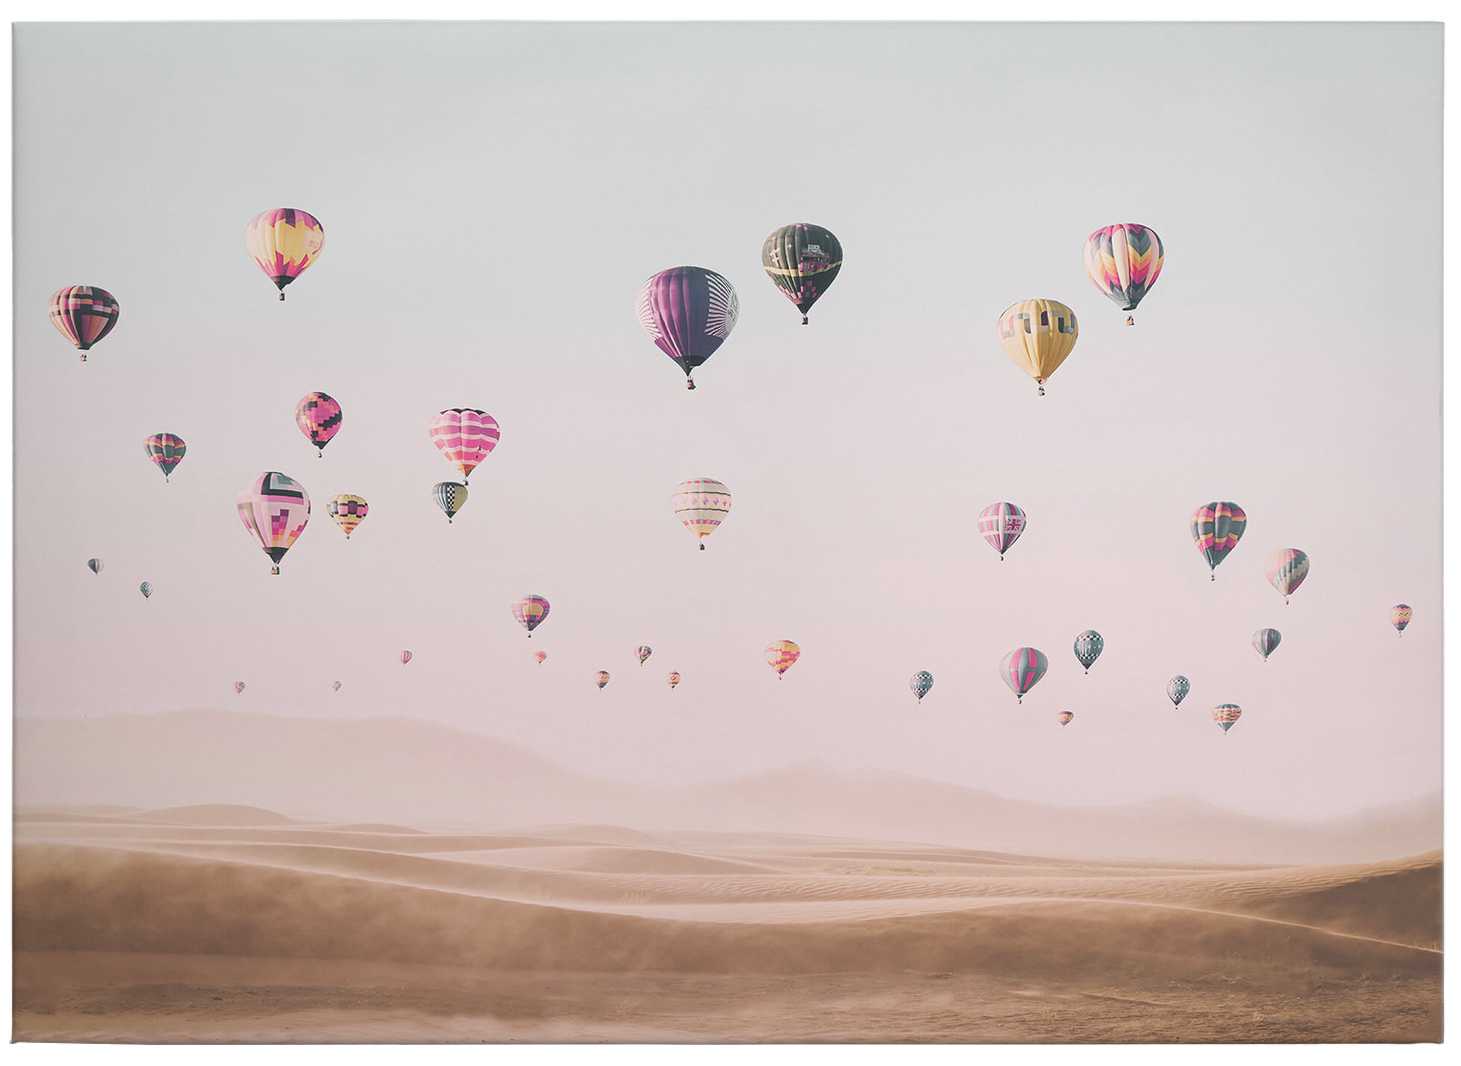             Leinwandbild Himmel & Heißluftballon, Sisi & Seb – 0,70 m x 0,50 m
        